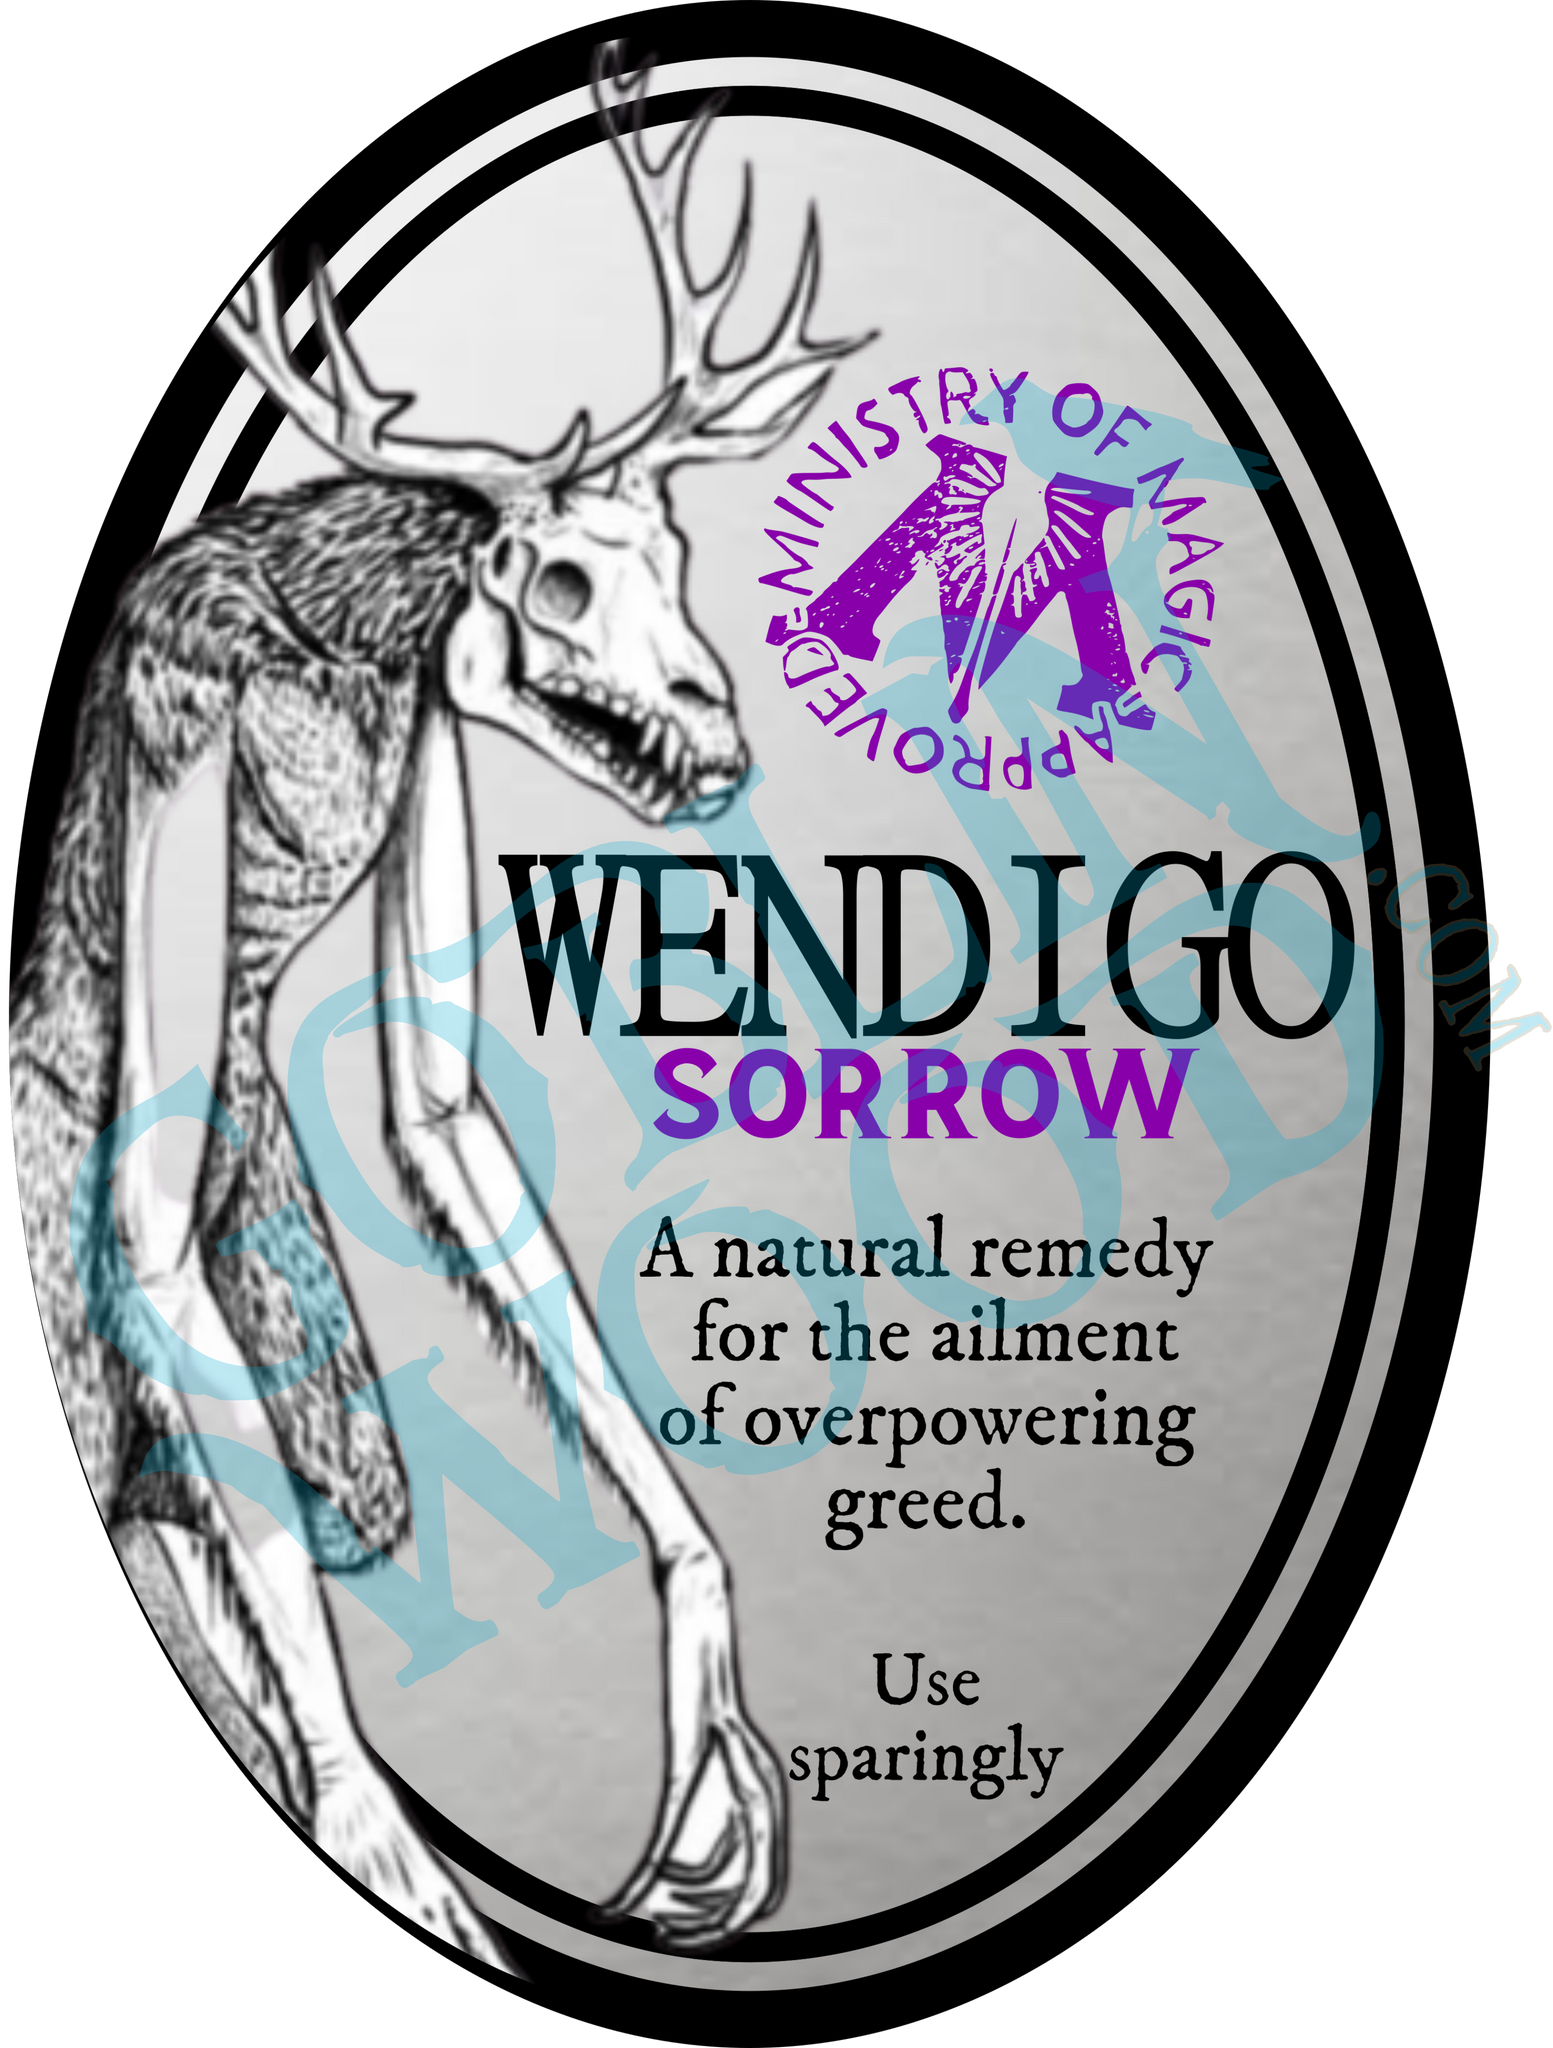 Wendigo Sorrow - Harry Potter Inspired